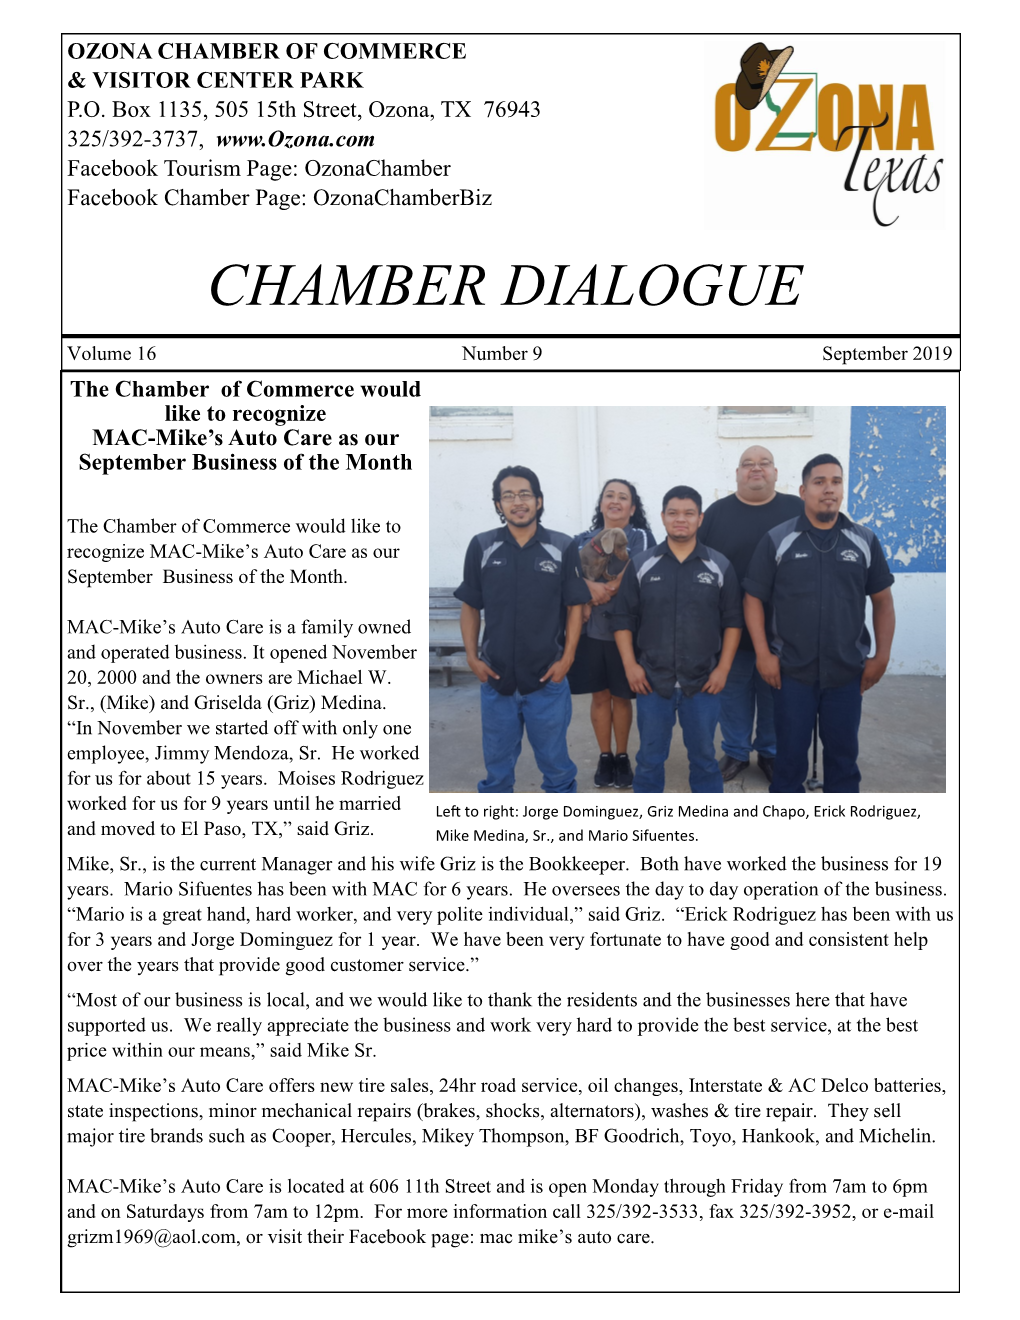 Chamber Dialogue